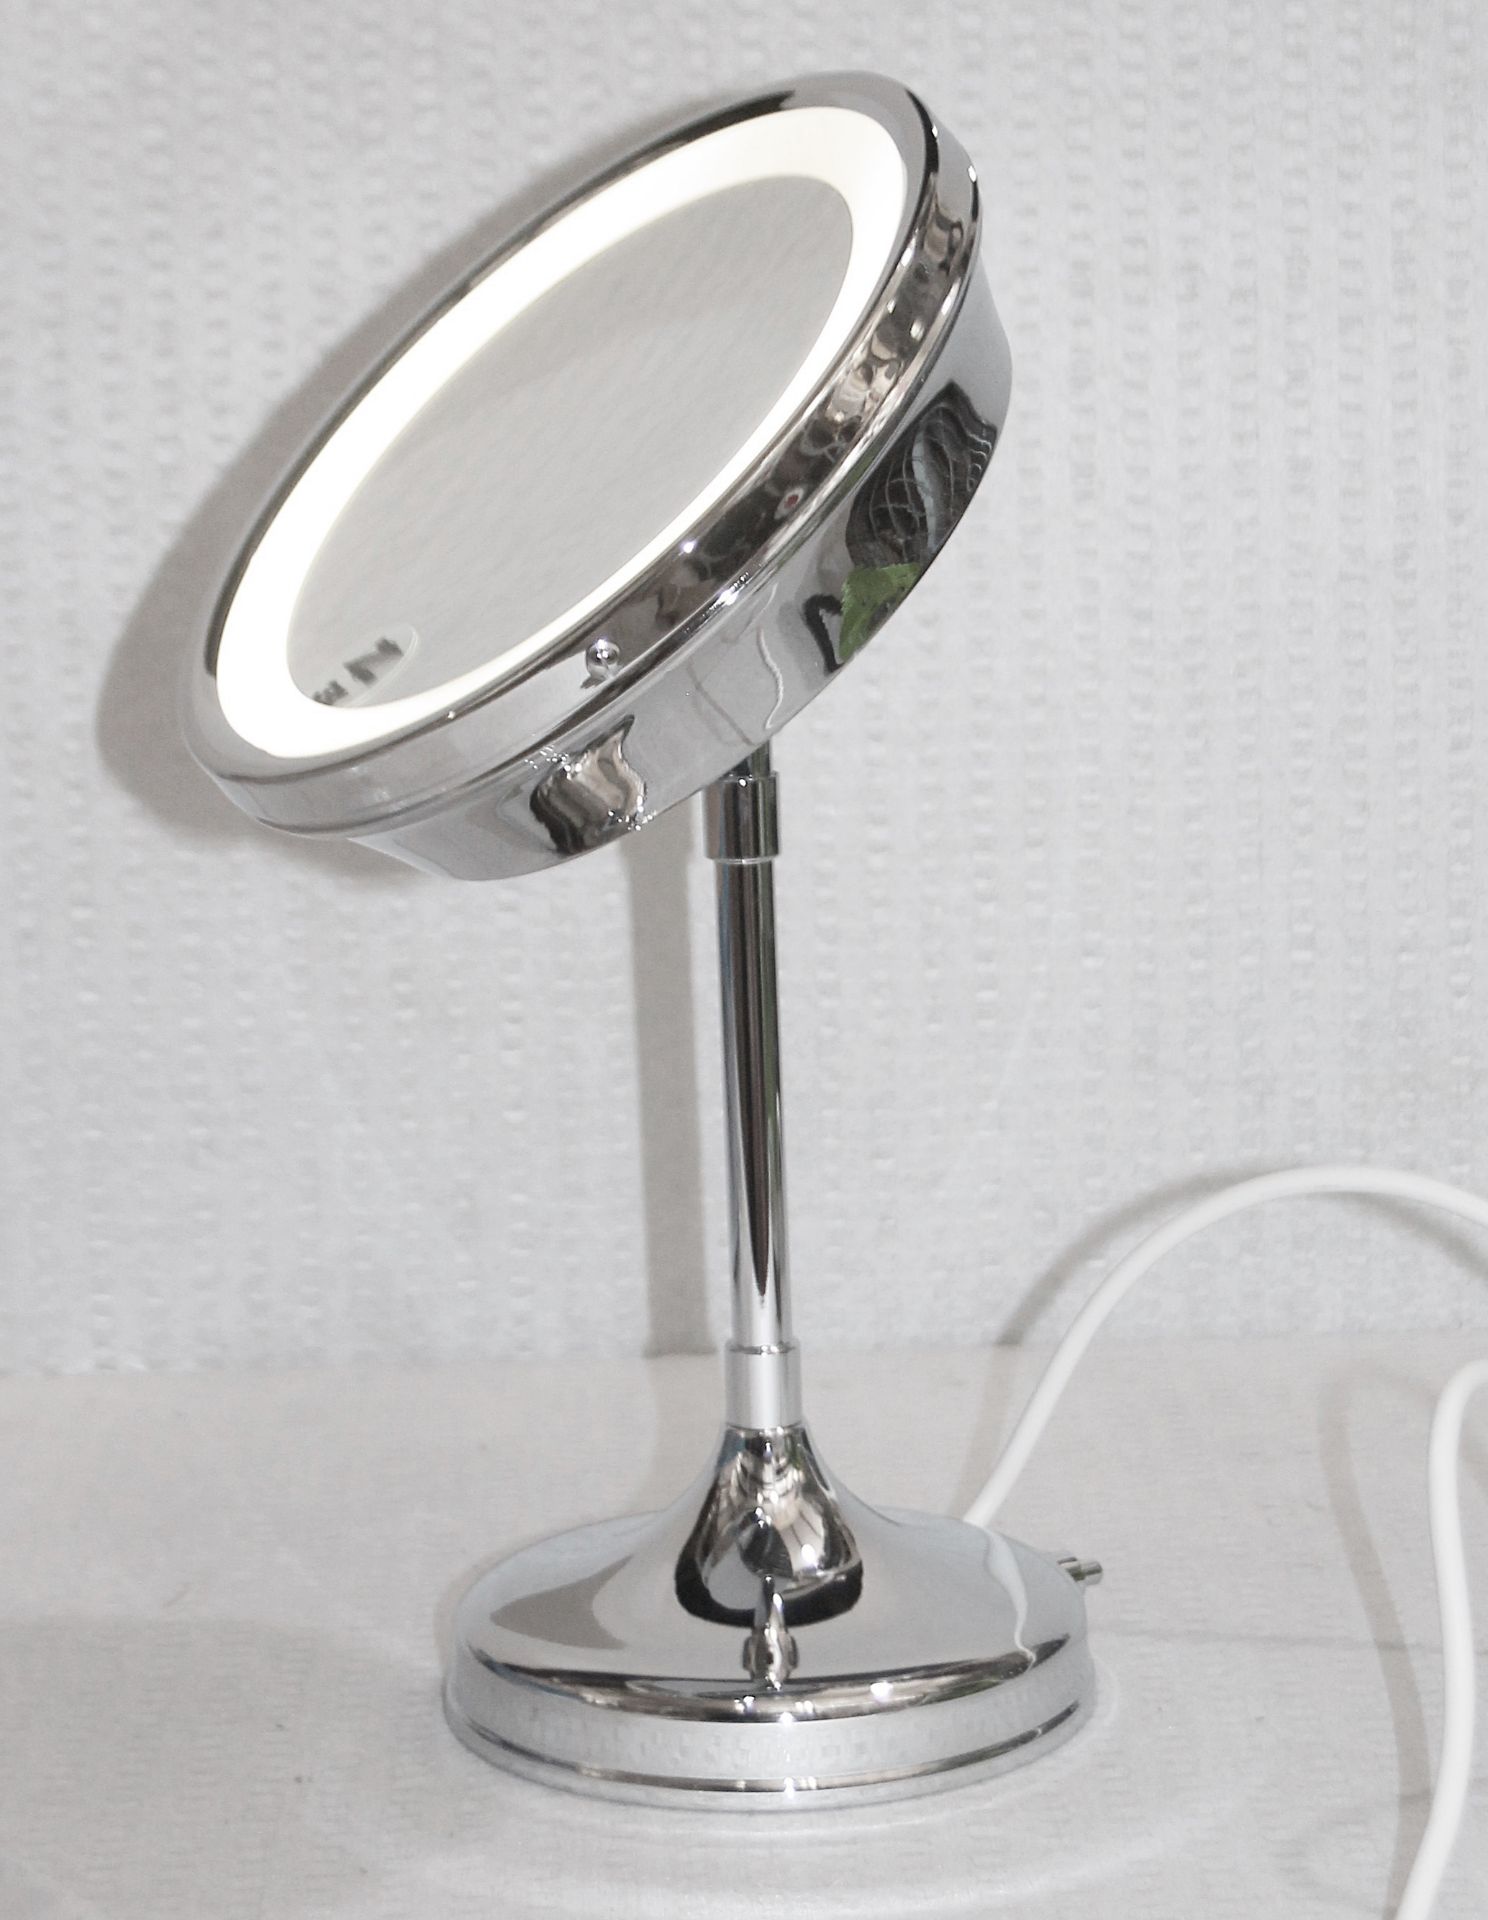 1 x ZODIAC Luxury Illuminated Stand Mirror Featuring 3x Magnification - Original Price £1,000 - Image 6 of 9